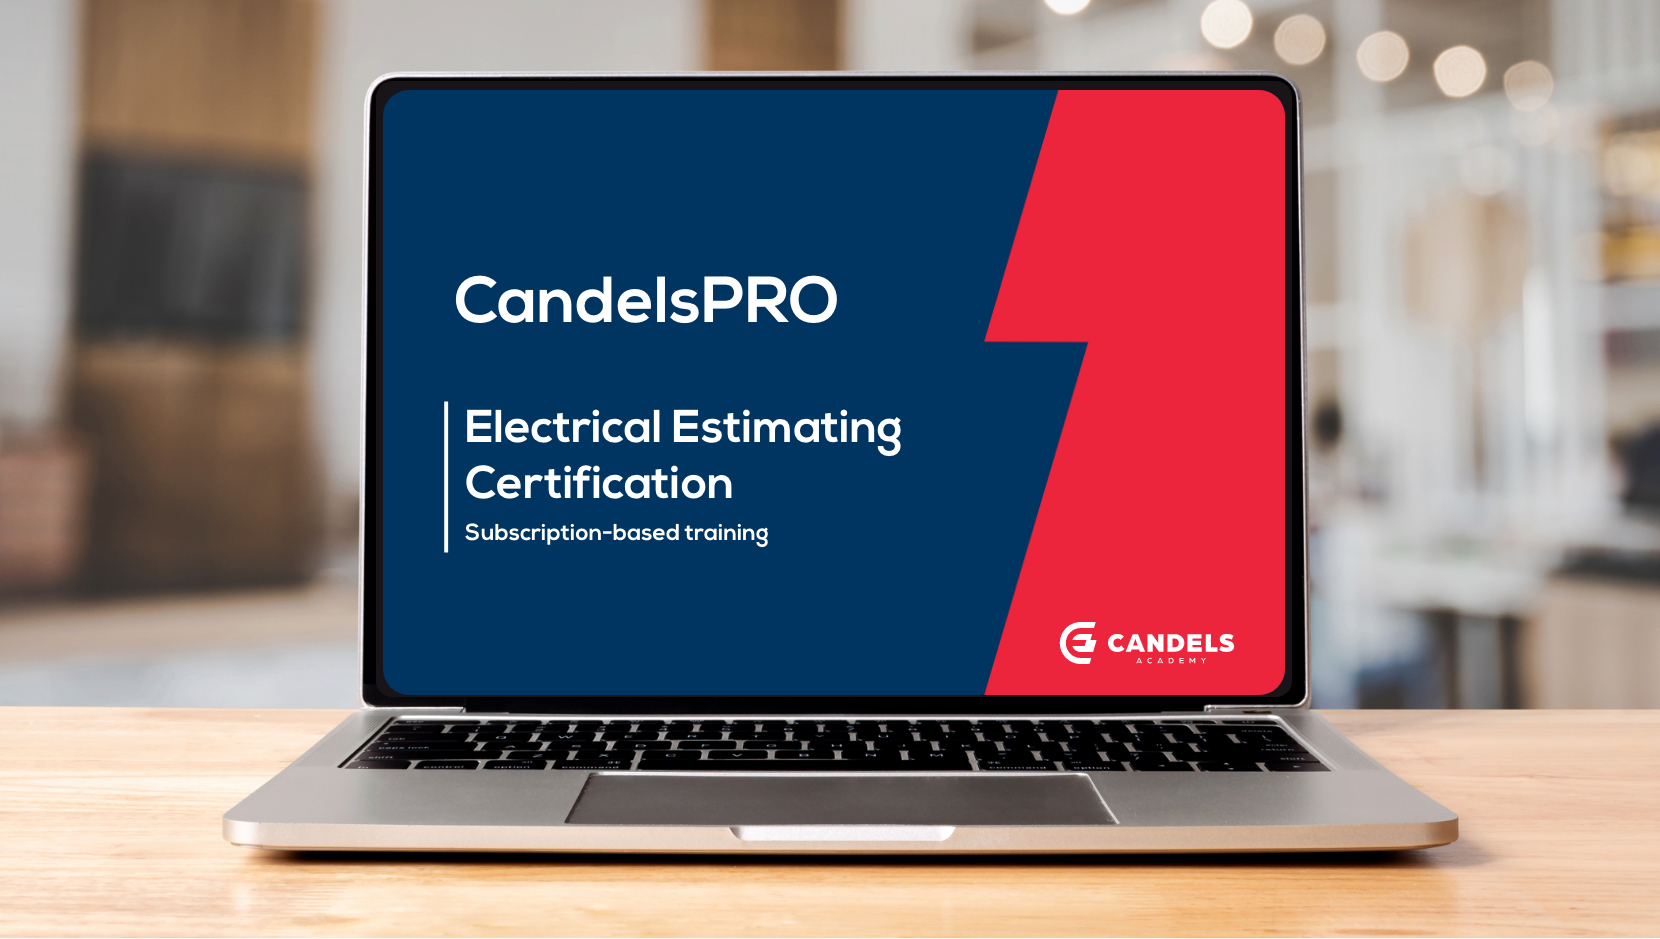 CandelsPRO Electrical Estimating Certification